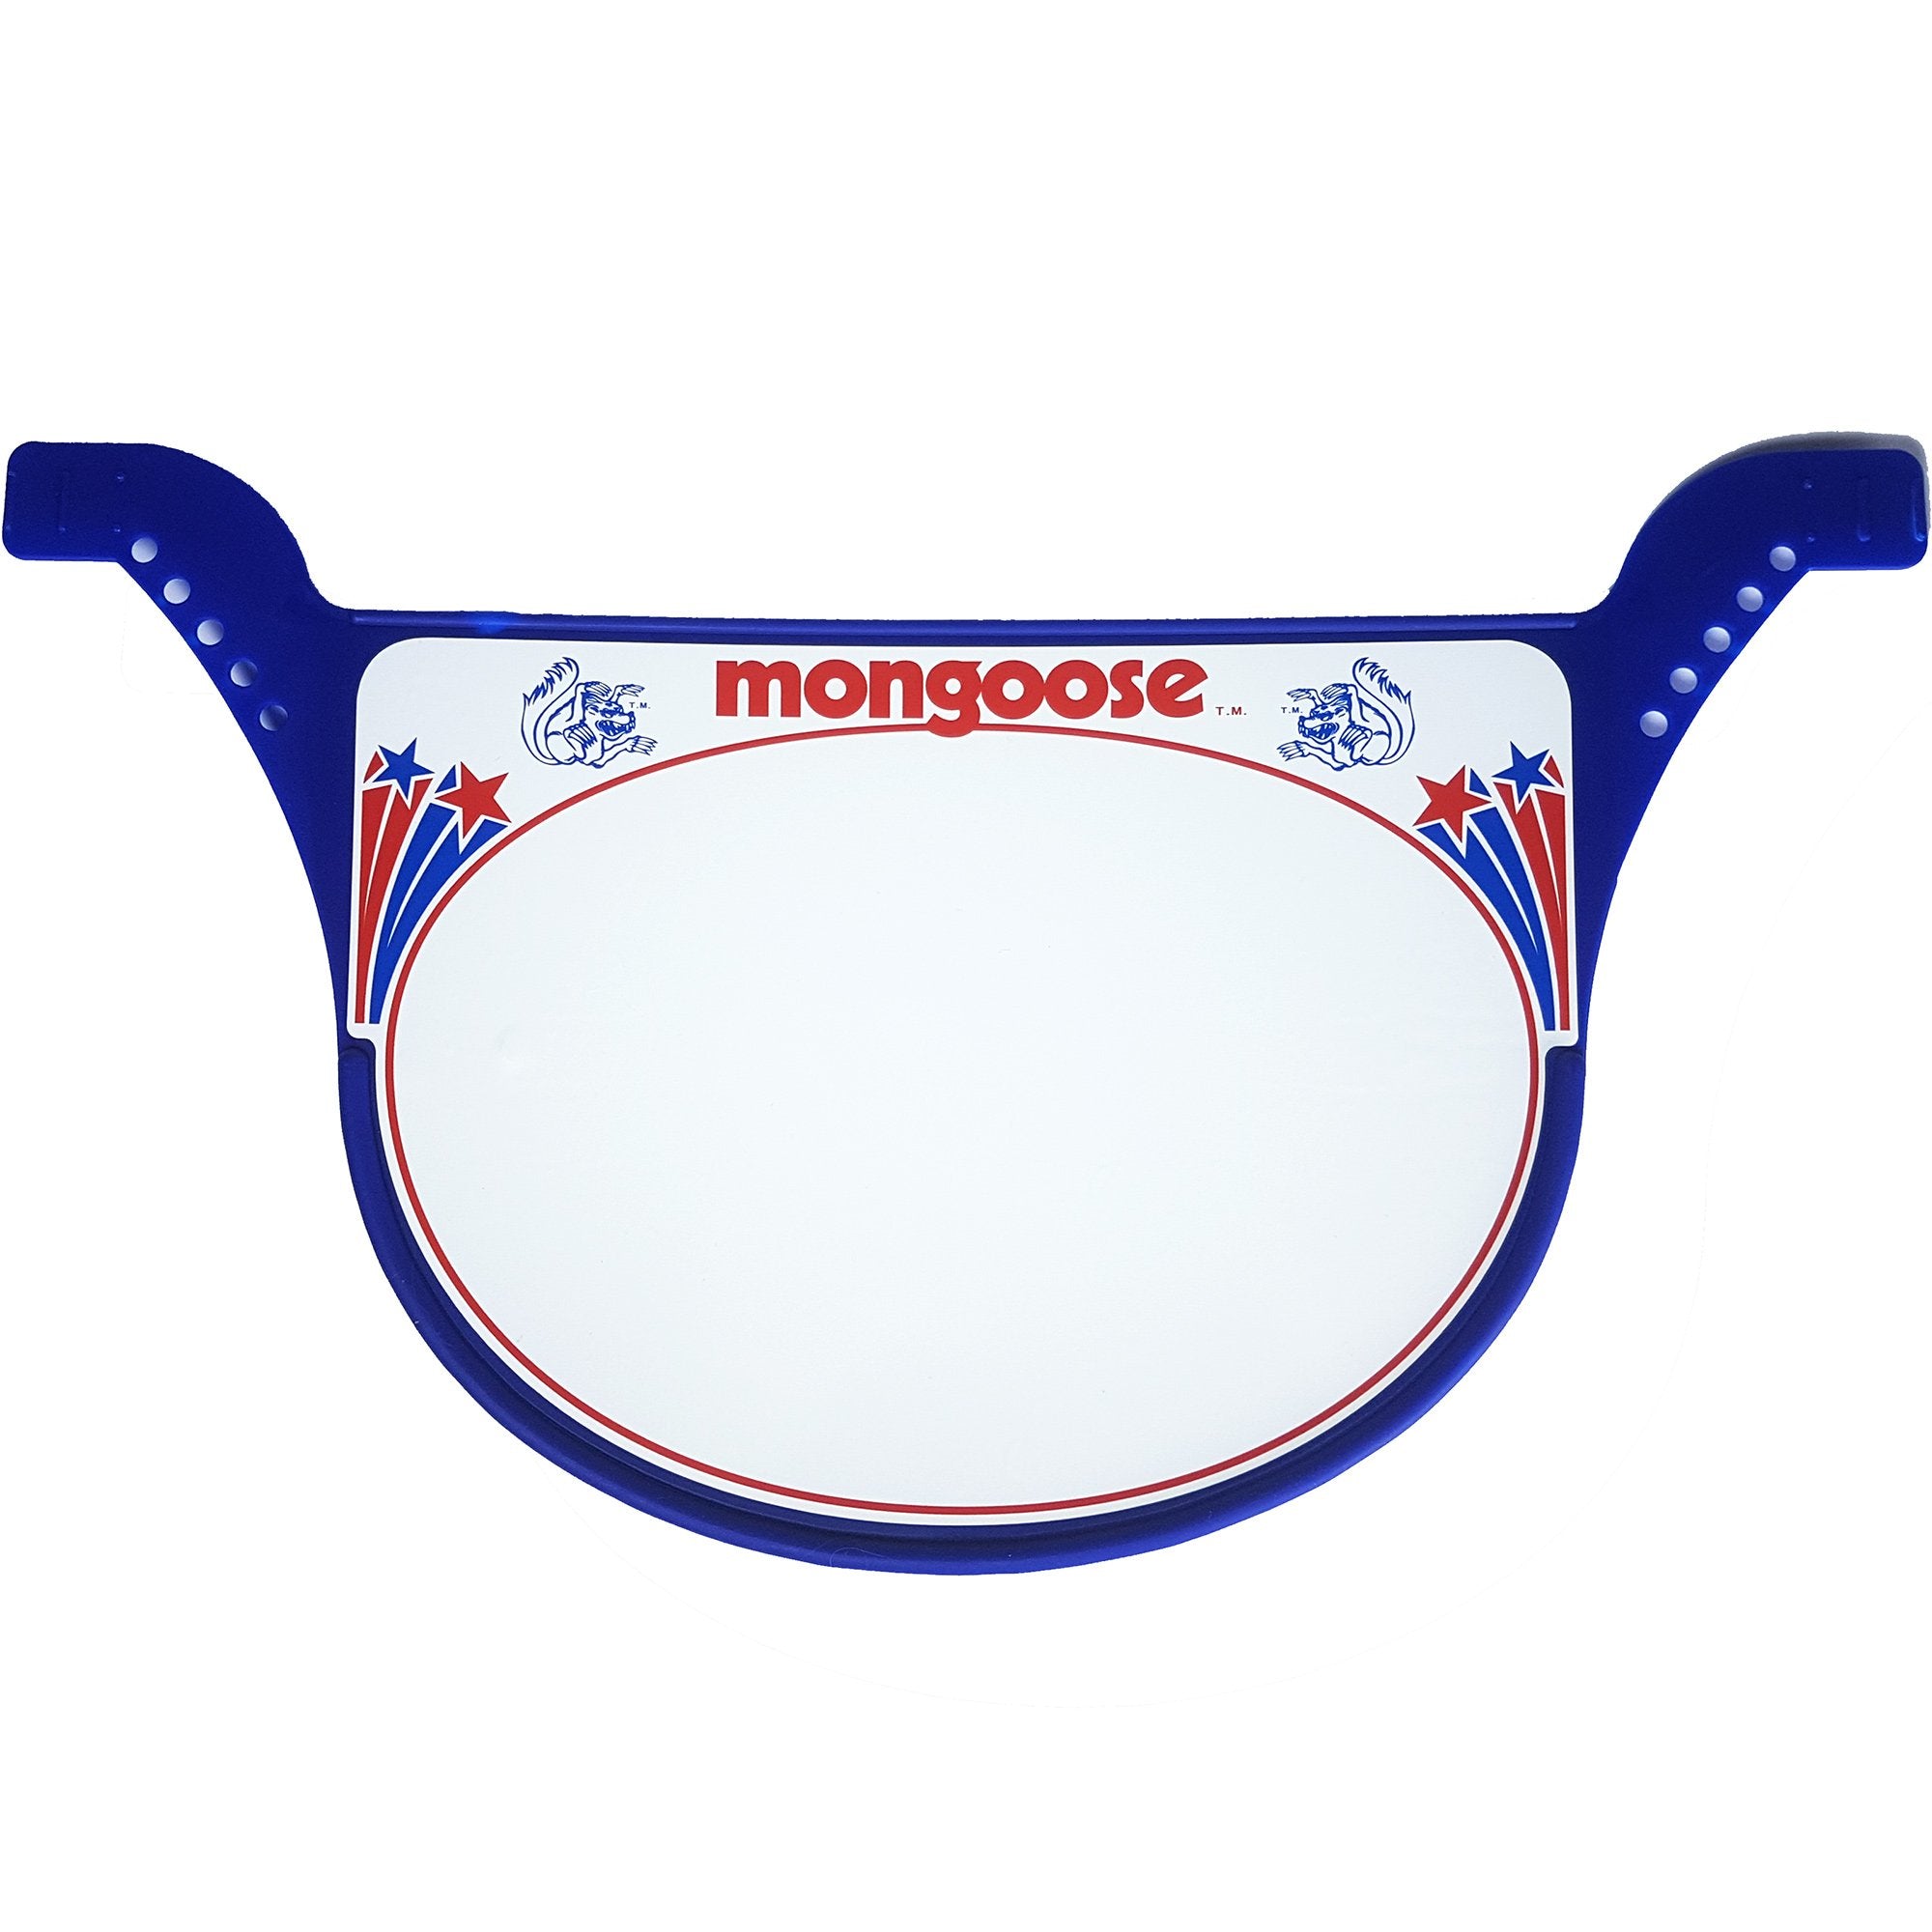 Mongoose Race Plate Blue - Old School Bmx